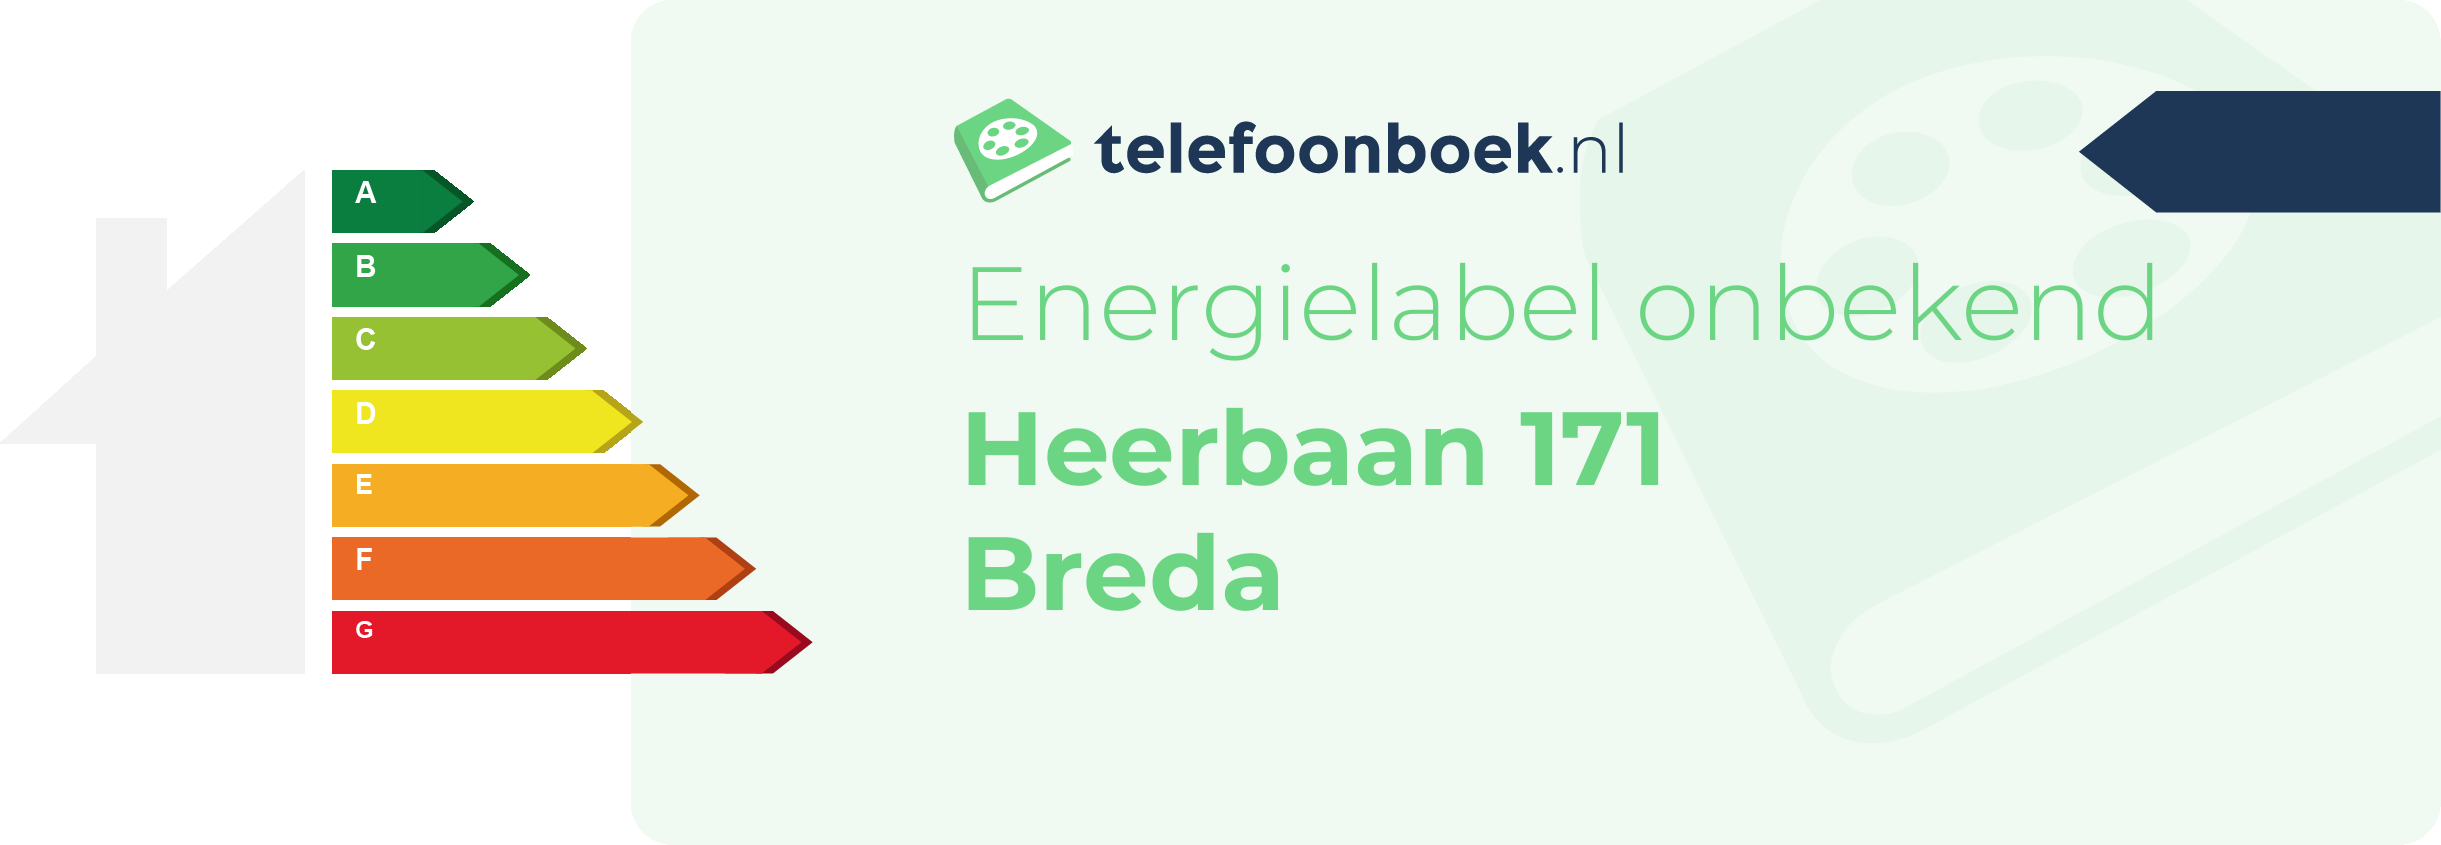 Energielabel Heerbaan 171 Breda